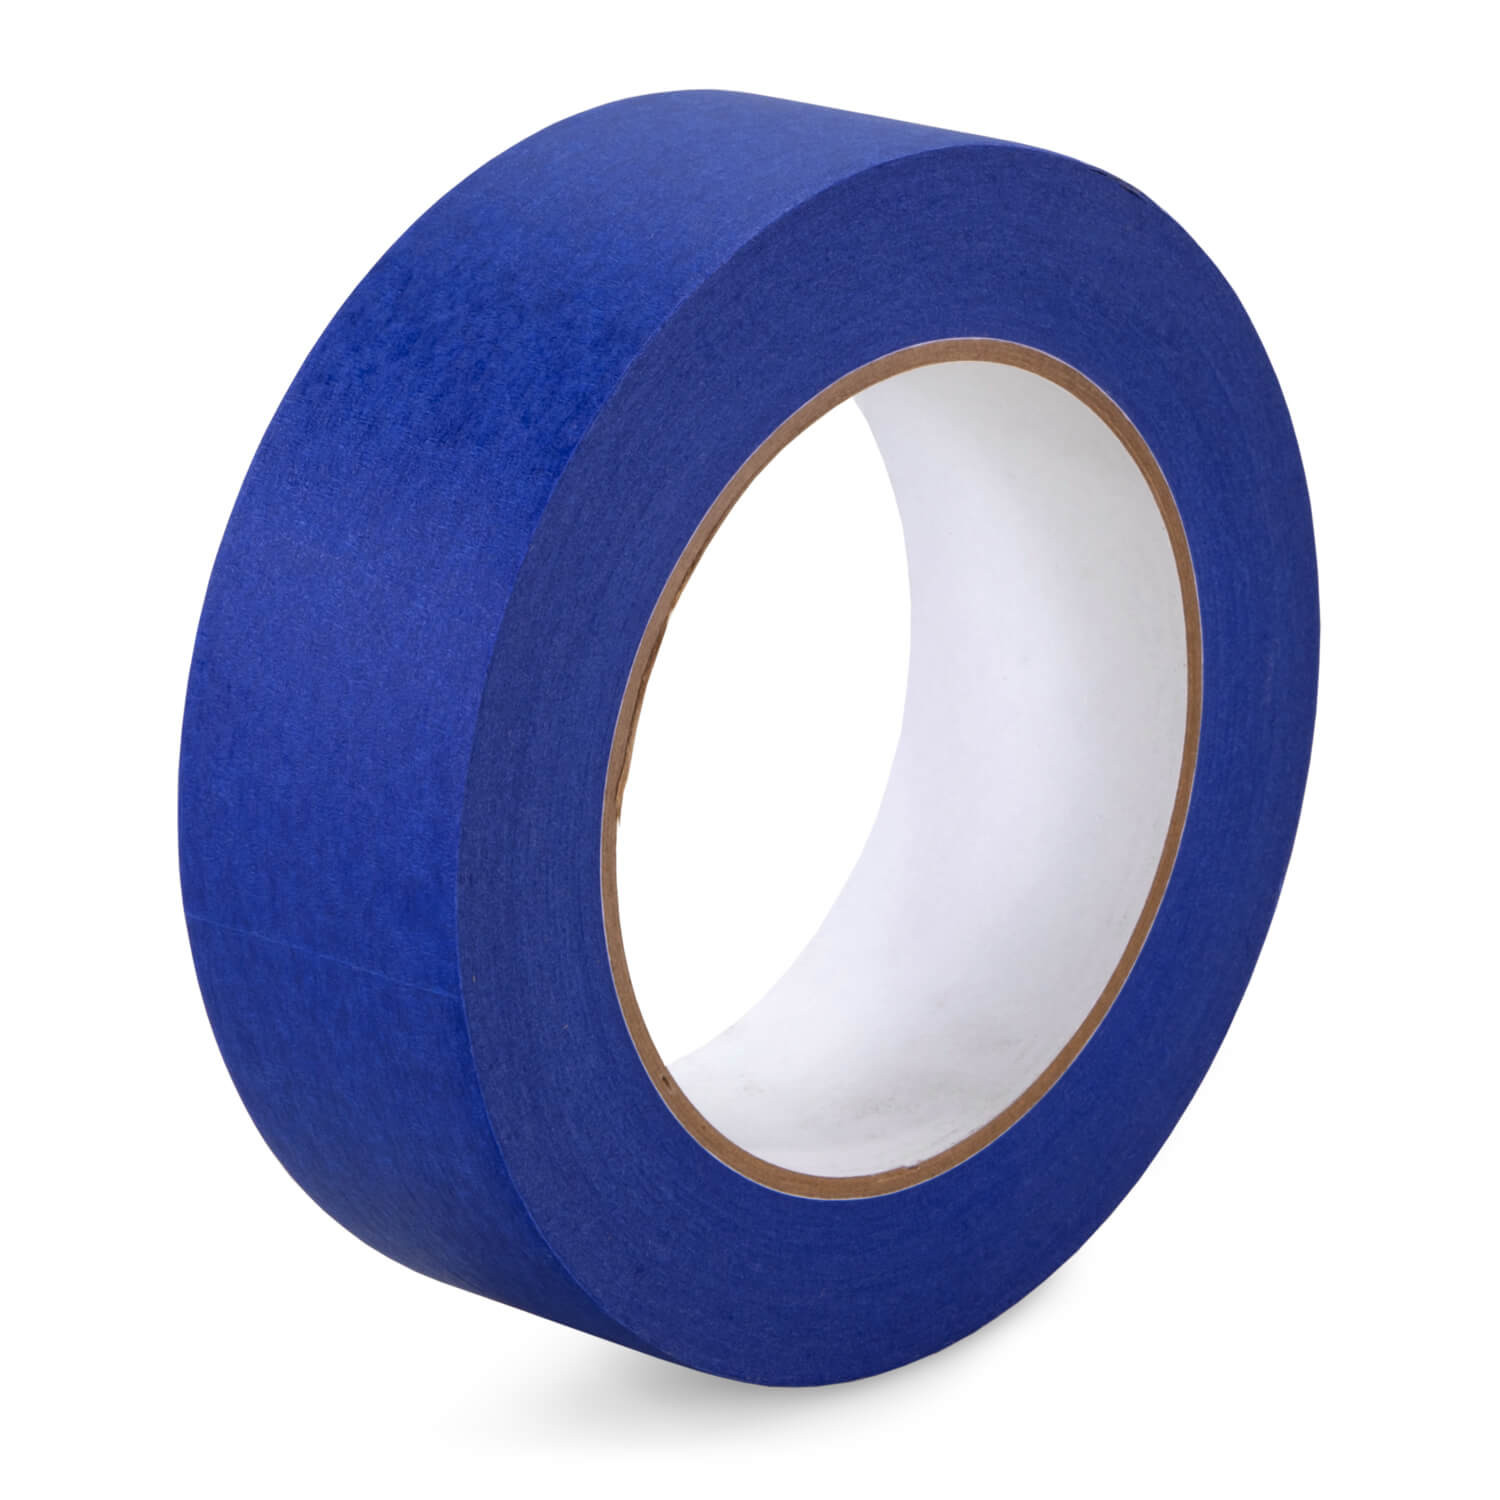 1 Roll Blue Painters Masking Tape - Talon Tape: 1 INCH x 60 yds